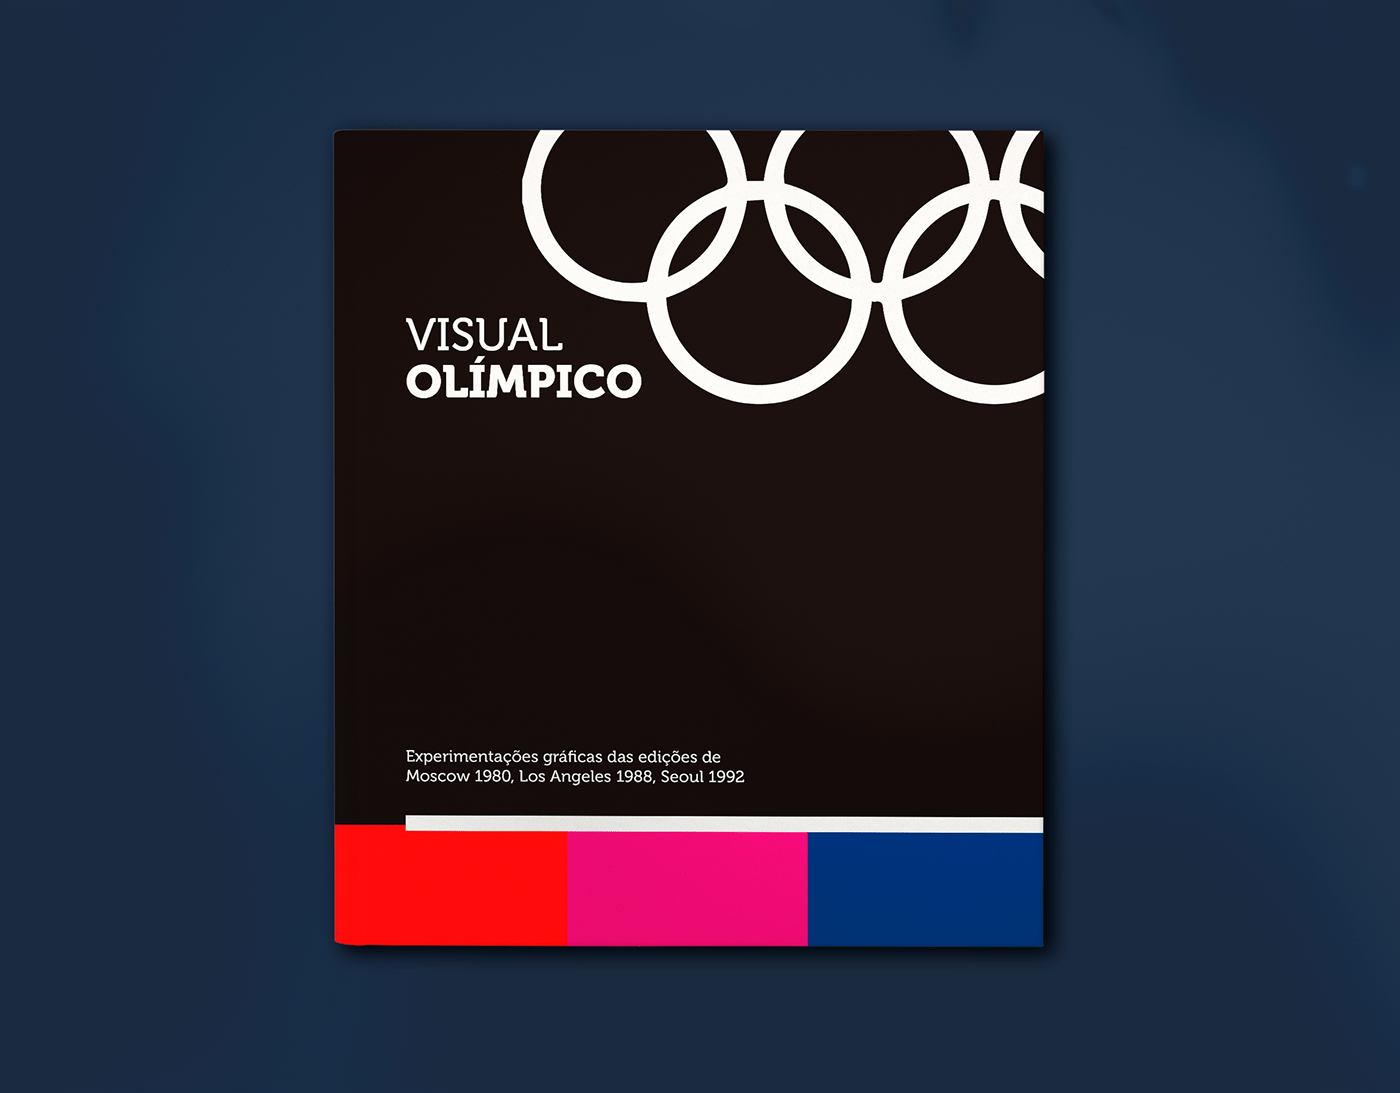 diagramação book Livro editorial Olympics olimpiadas Jogos Olímpicos Olympic Games sports diagramming